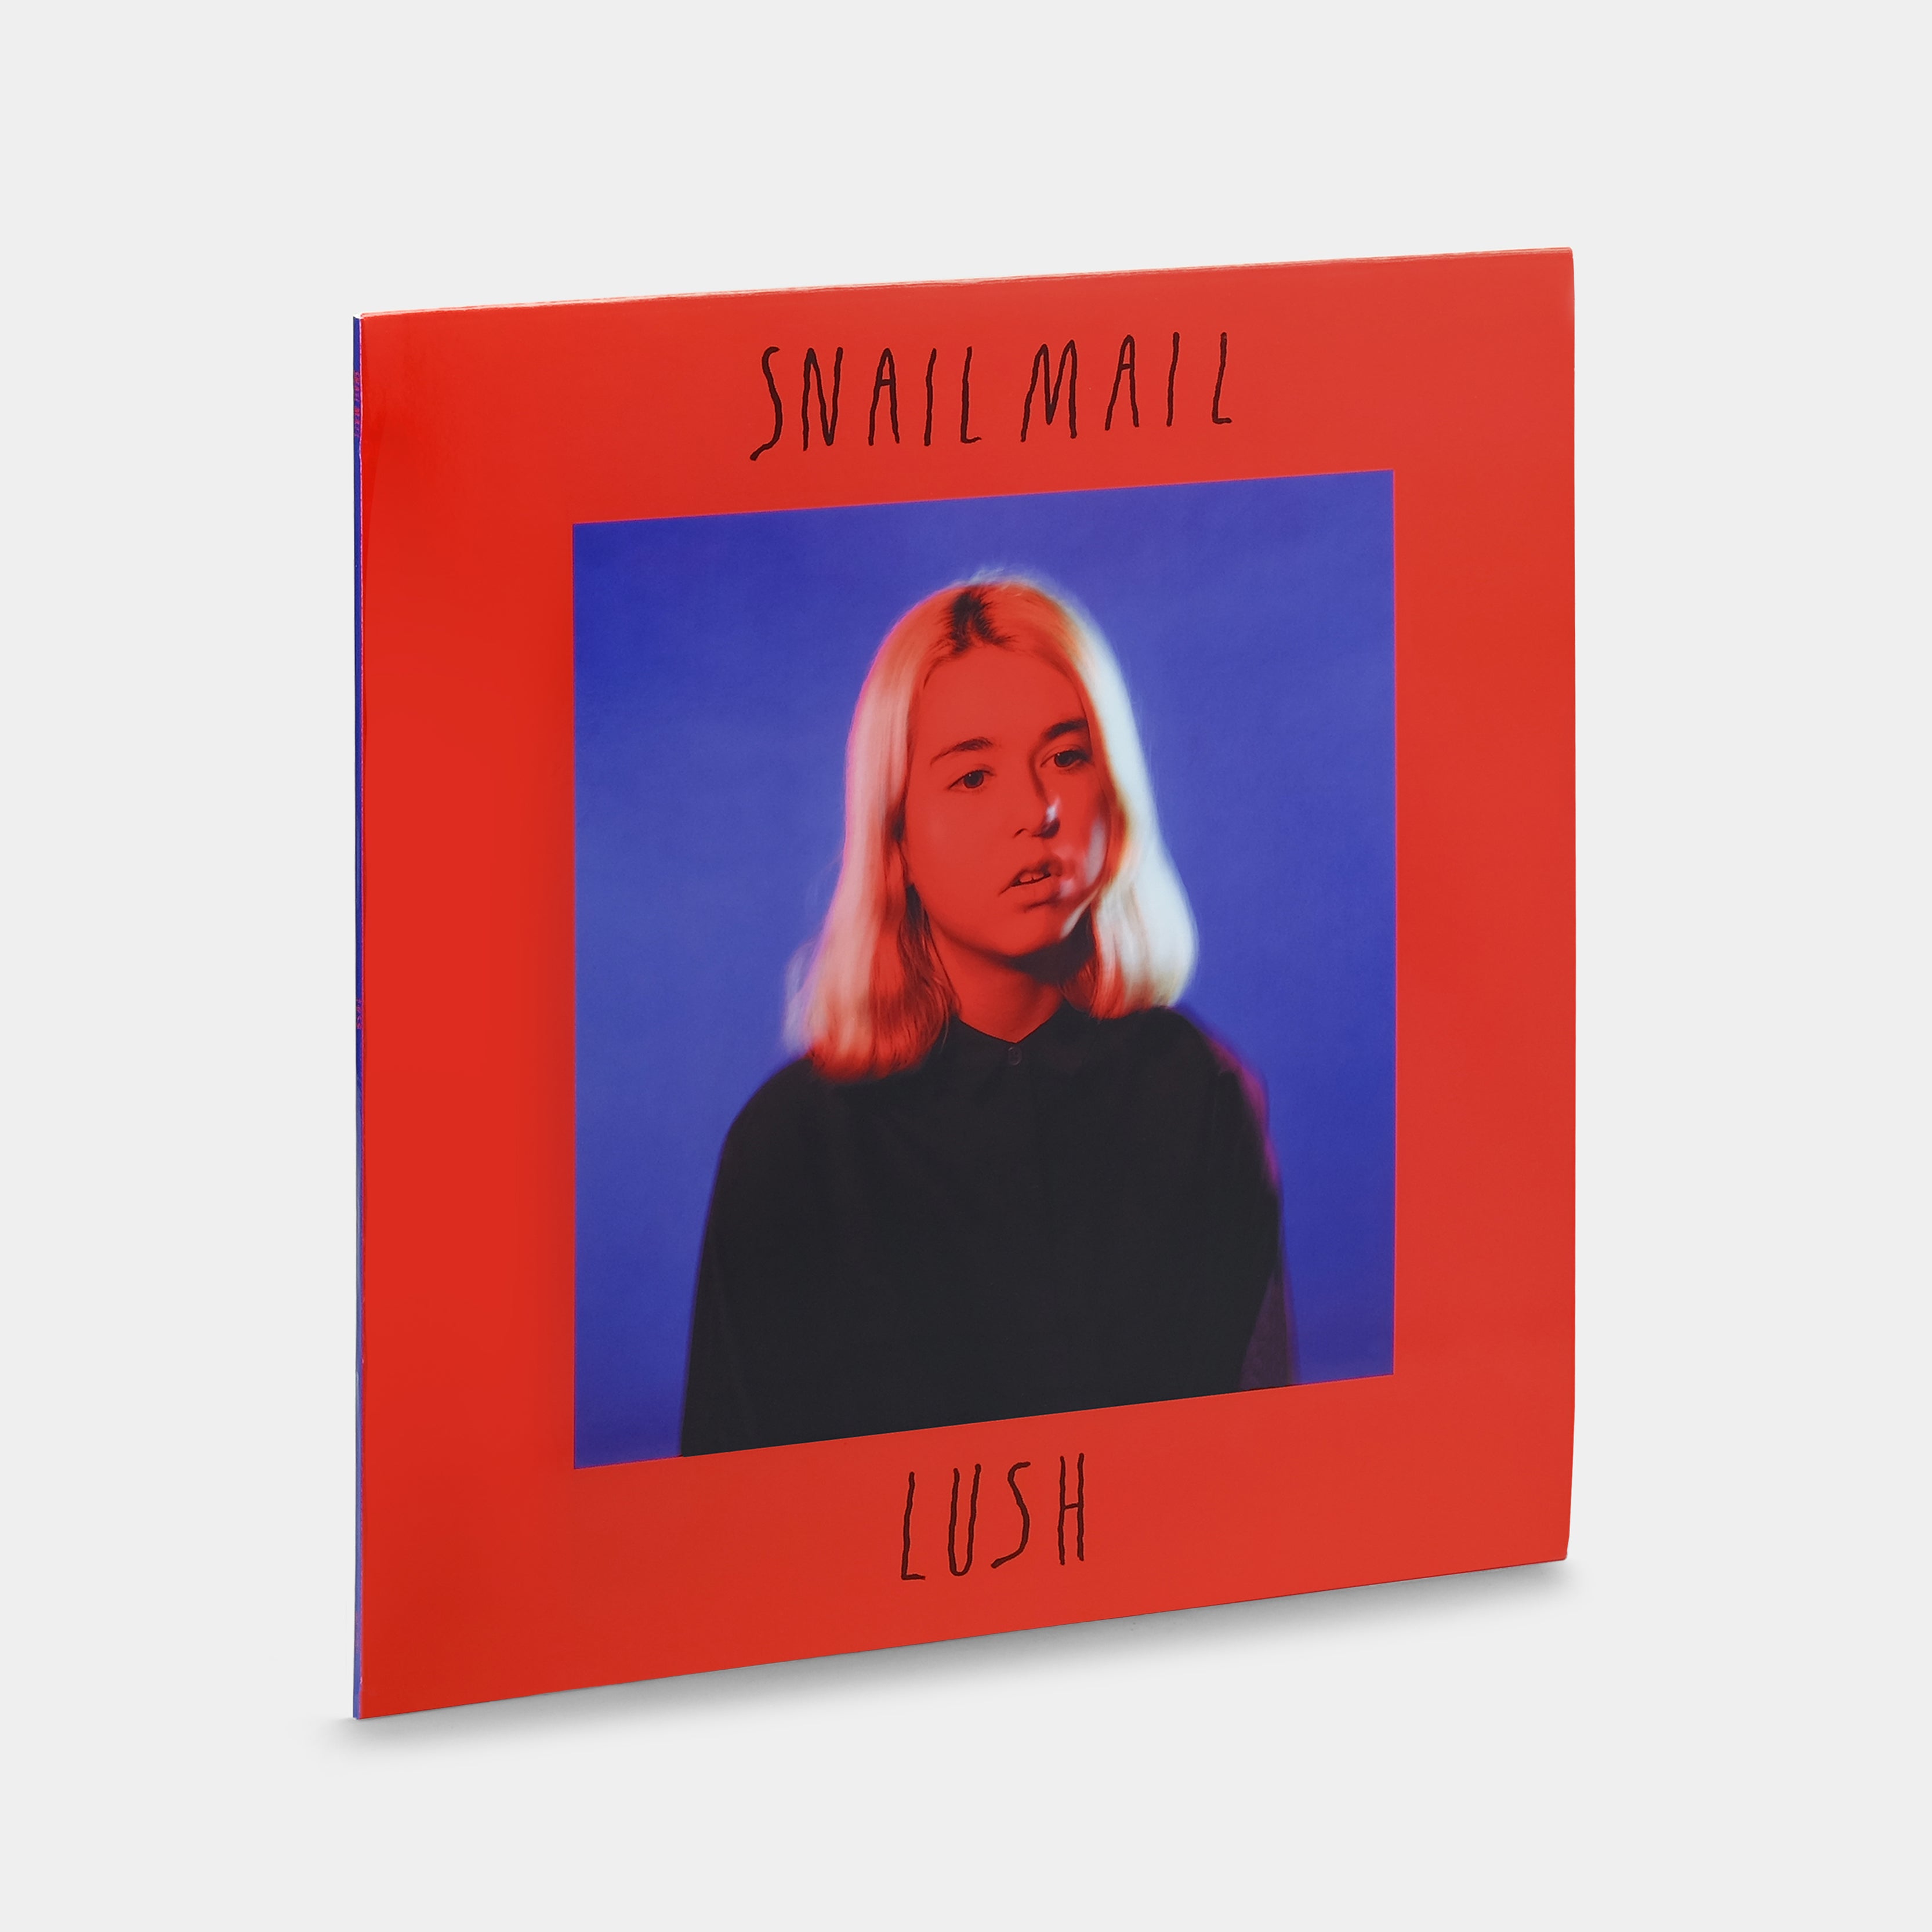 Snail Mail - Lush LP Vinyl Record